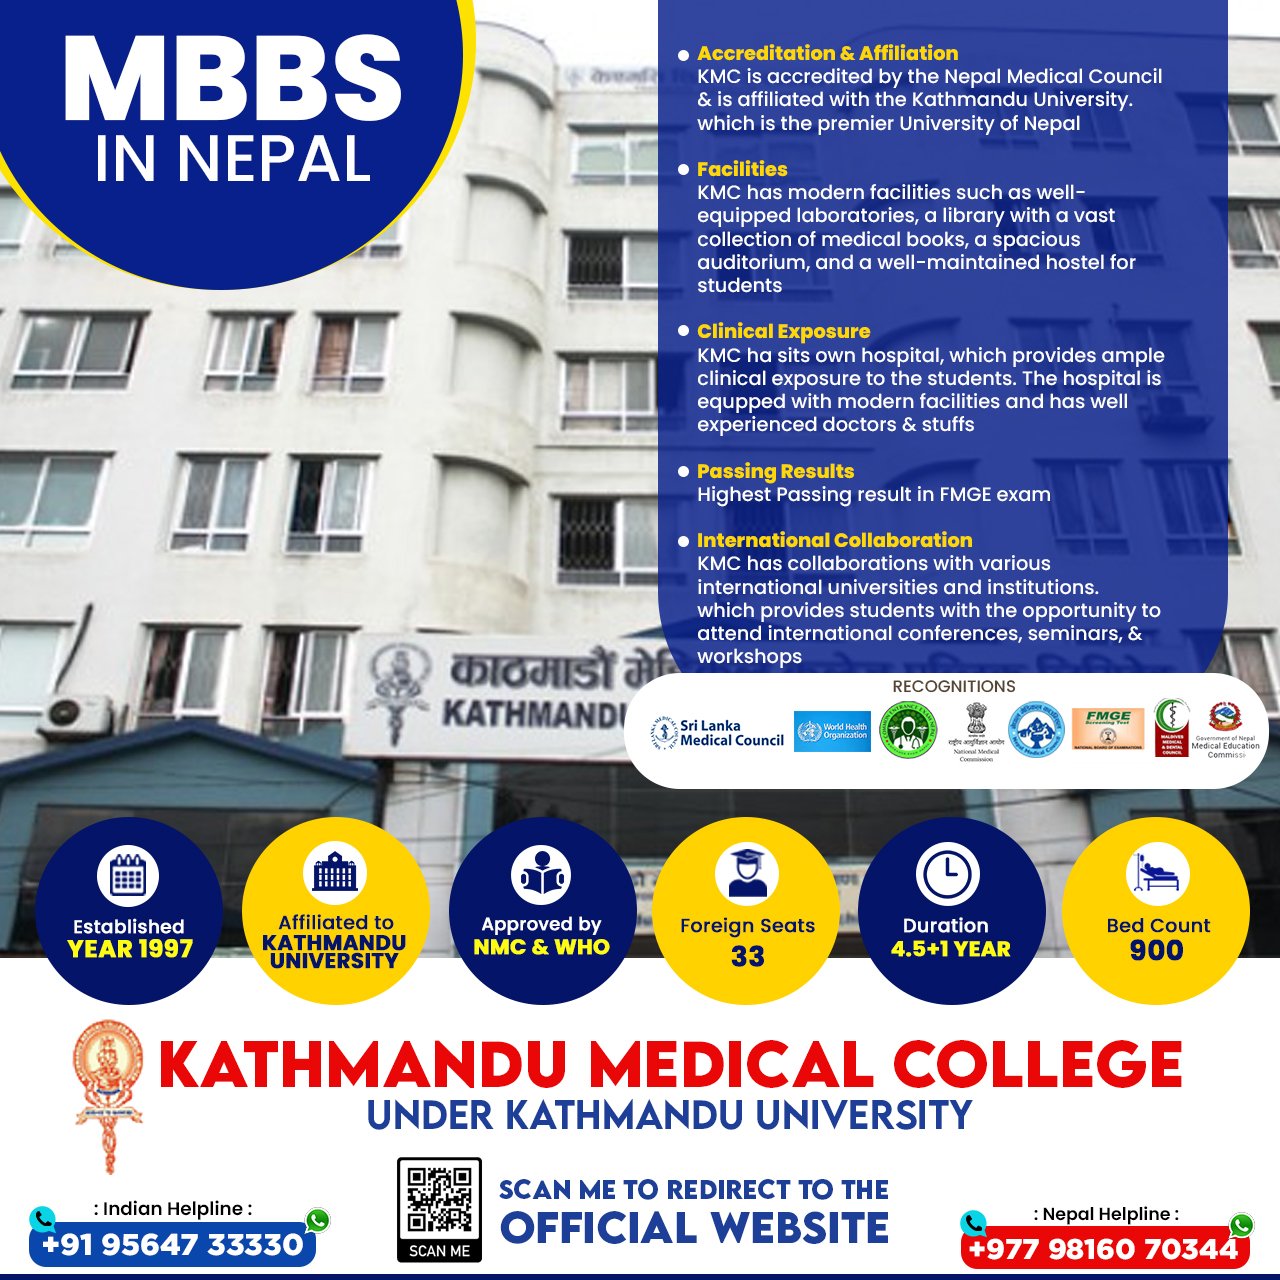 mbbs-in-nepal-at-kathmandu-medical-college-under-kathmandu-university